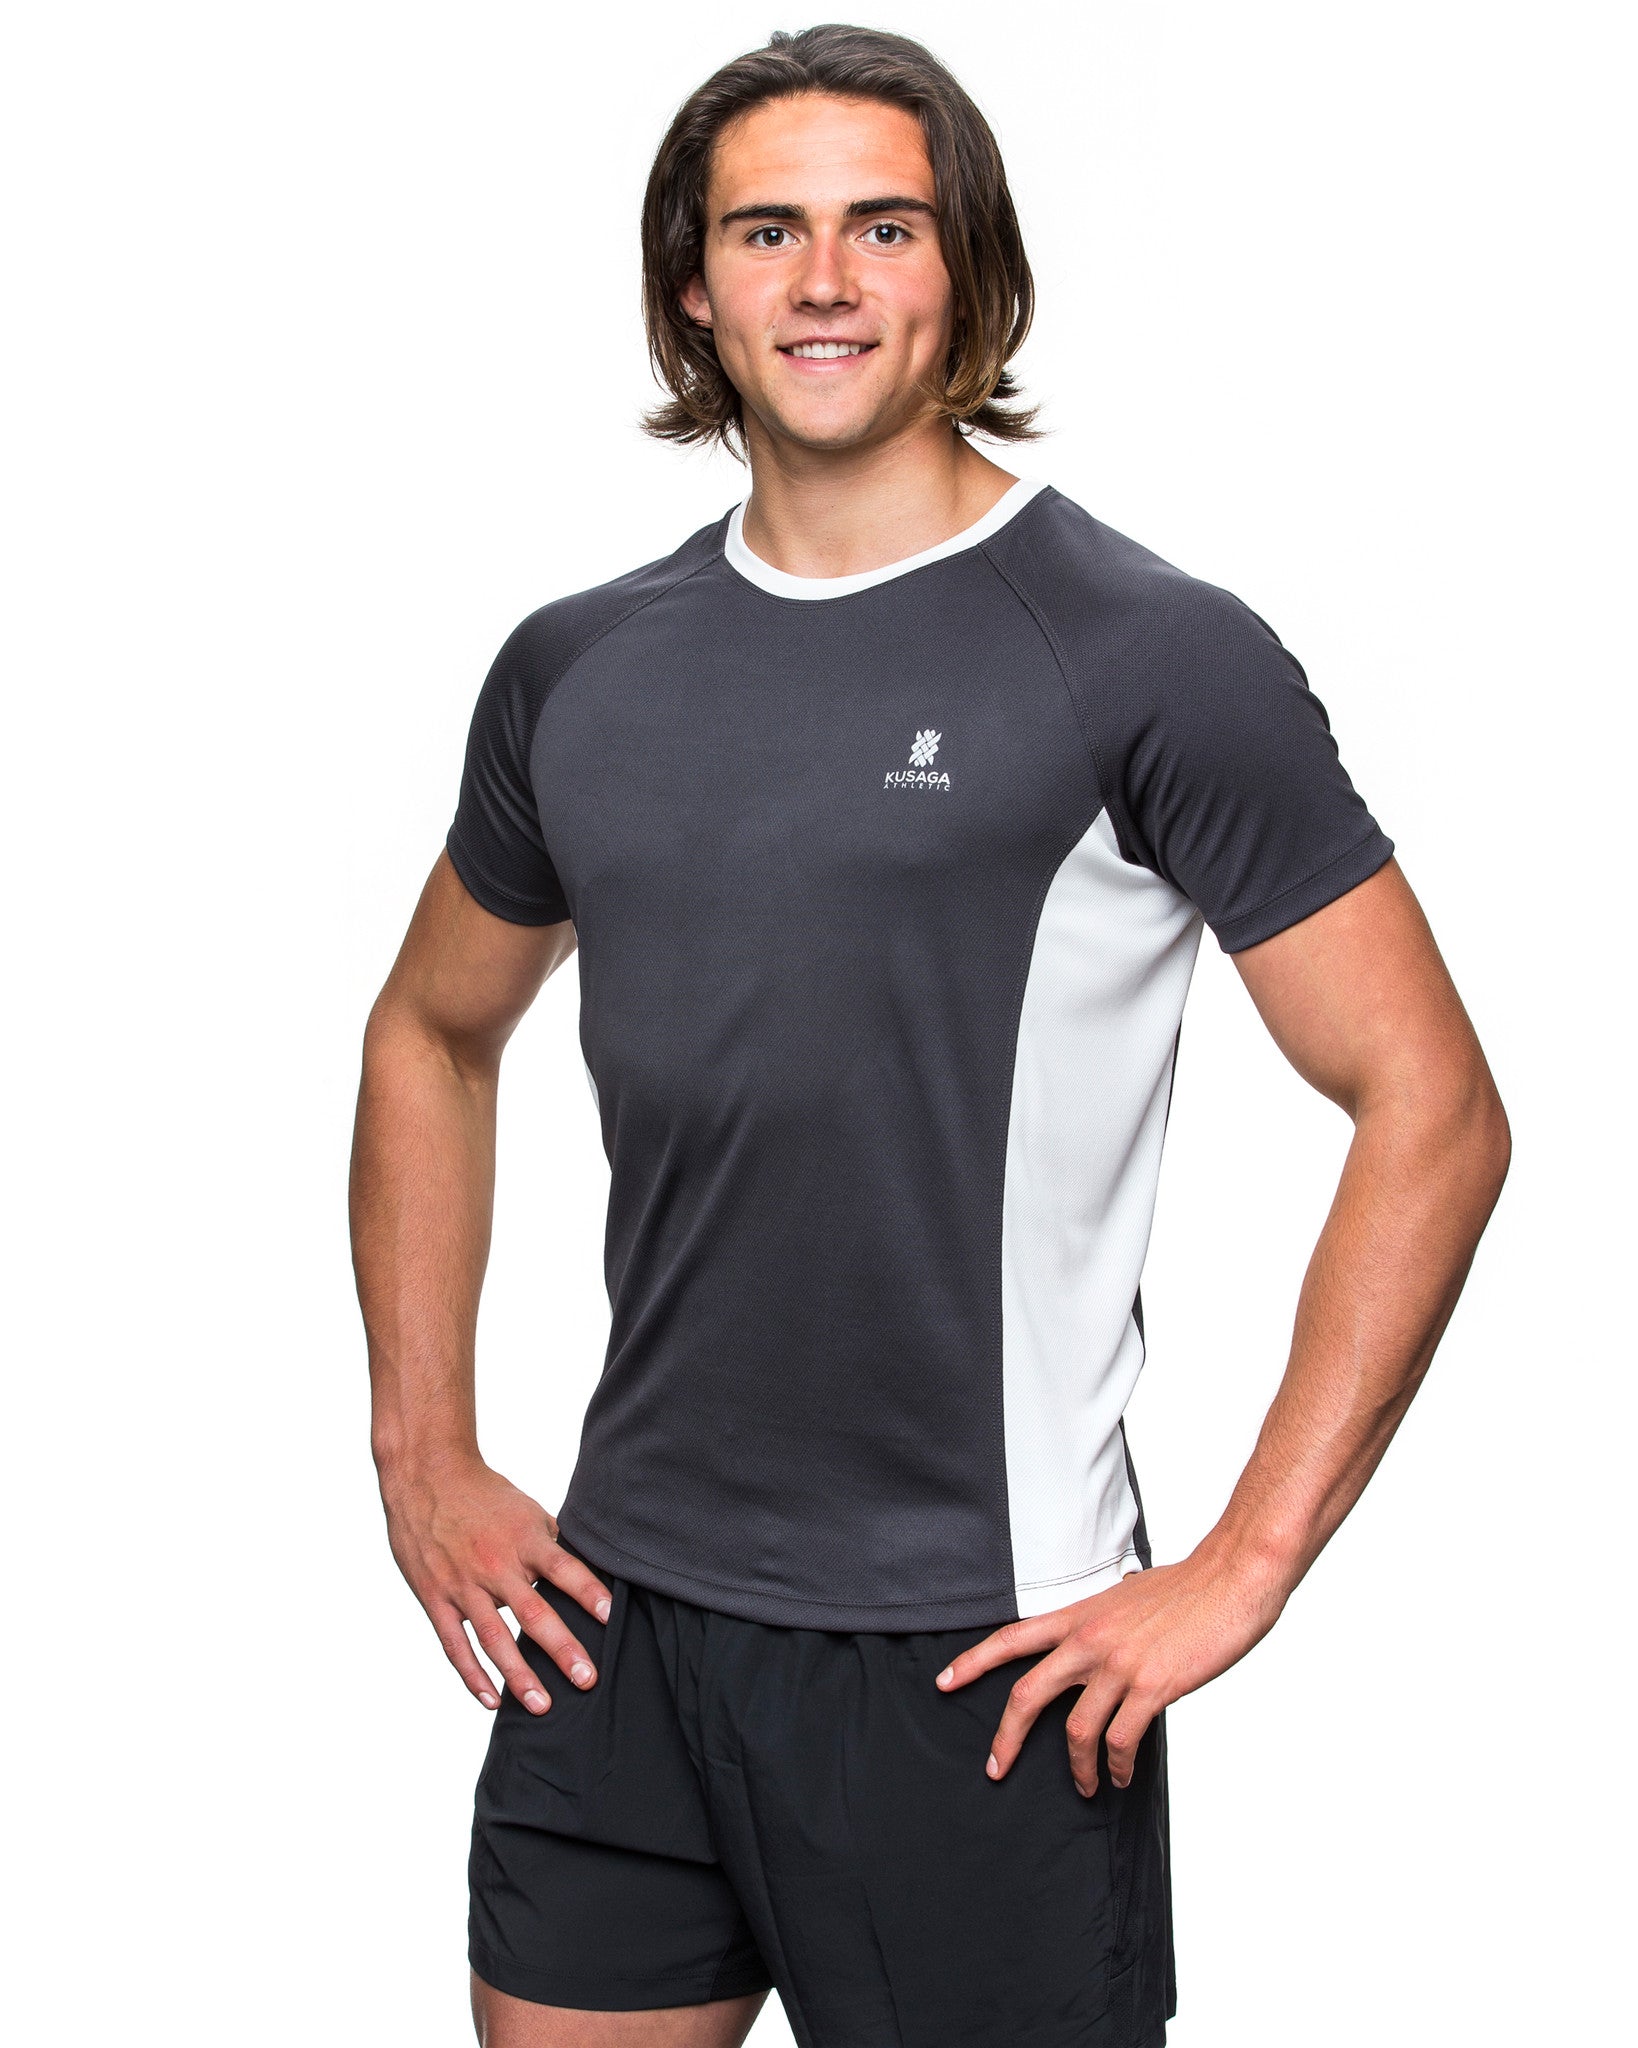 Men's ECODRY® Panel Run Tee in grey, flame and white by Kusaga Athletic 